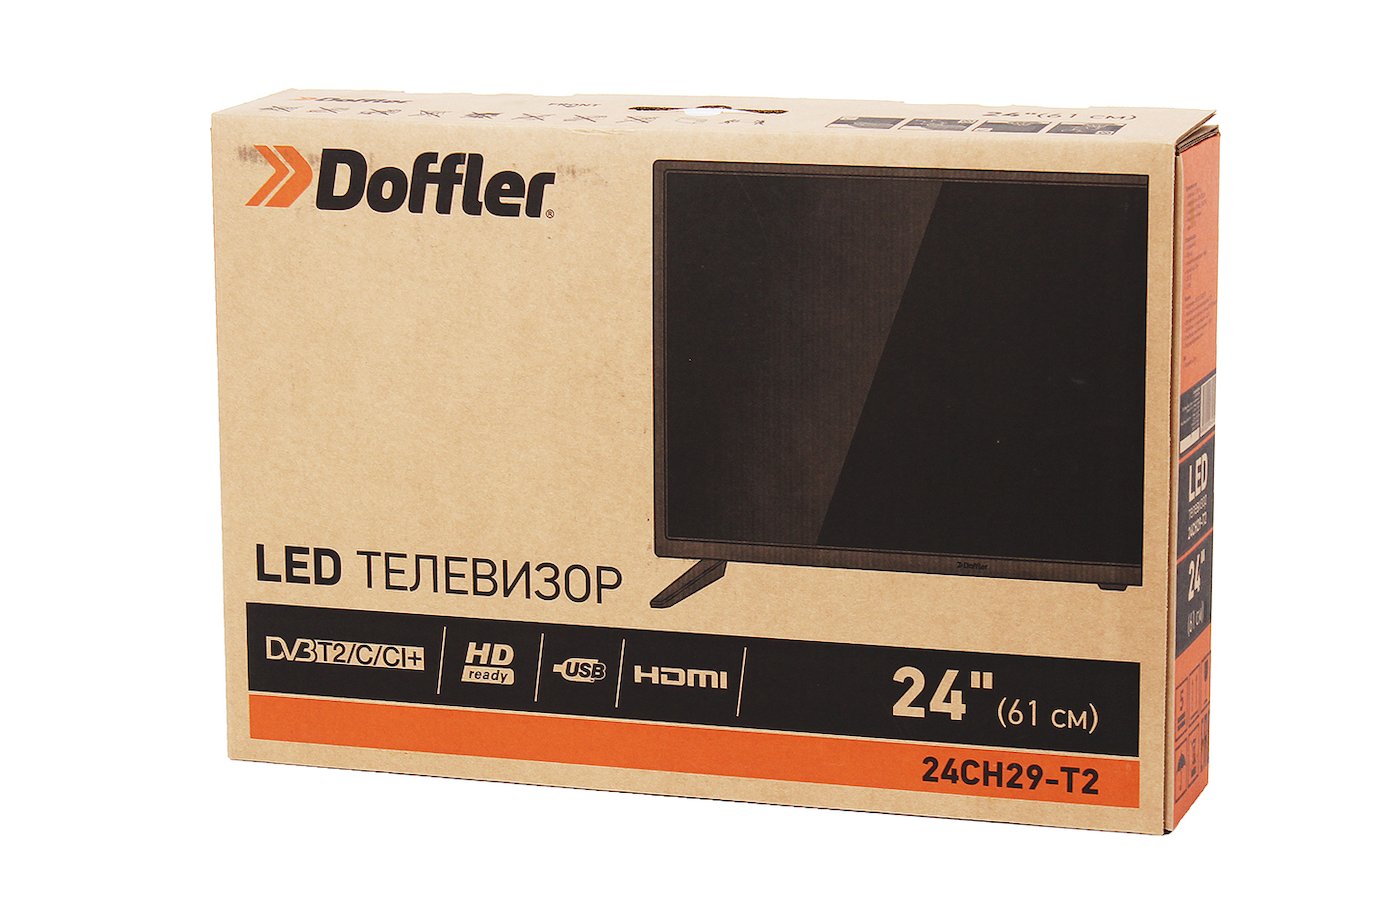 Купить телевизор doffler. Телевизор Doffler 32ghs67. Doffler 32ch52-t2 матрица. Doffler 32ch59-t2. ЖК телевизор Doffler 24ch29-t2.